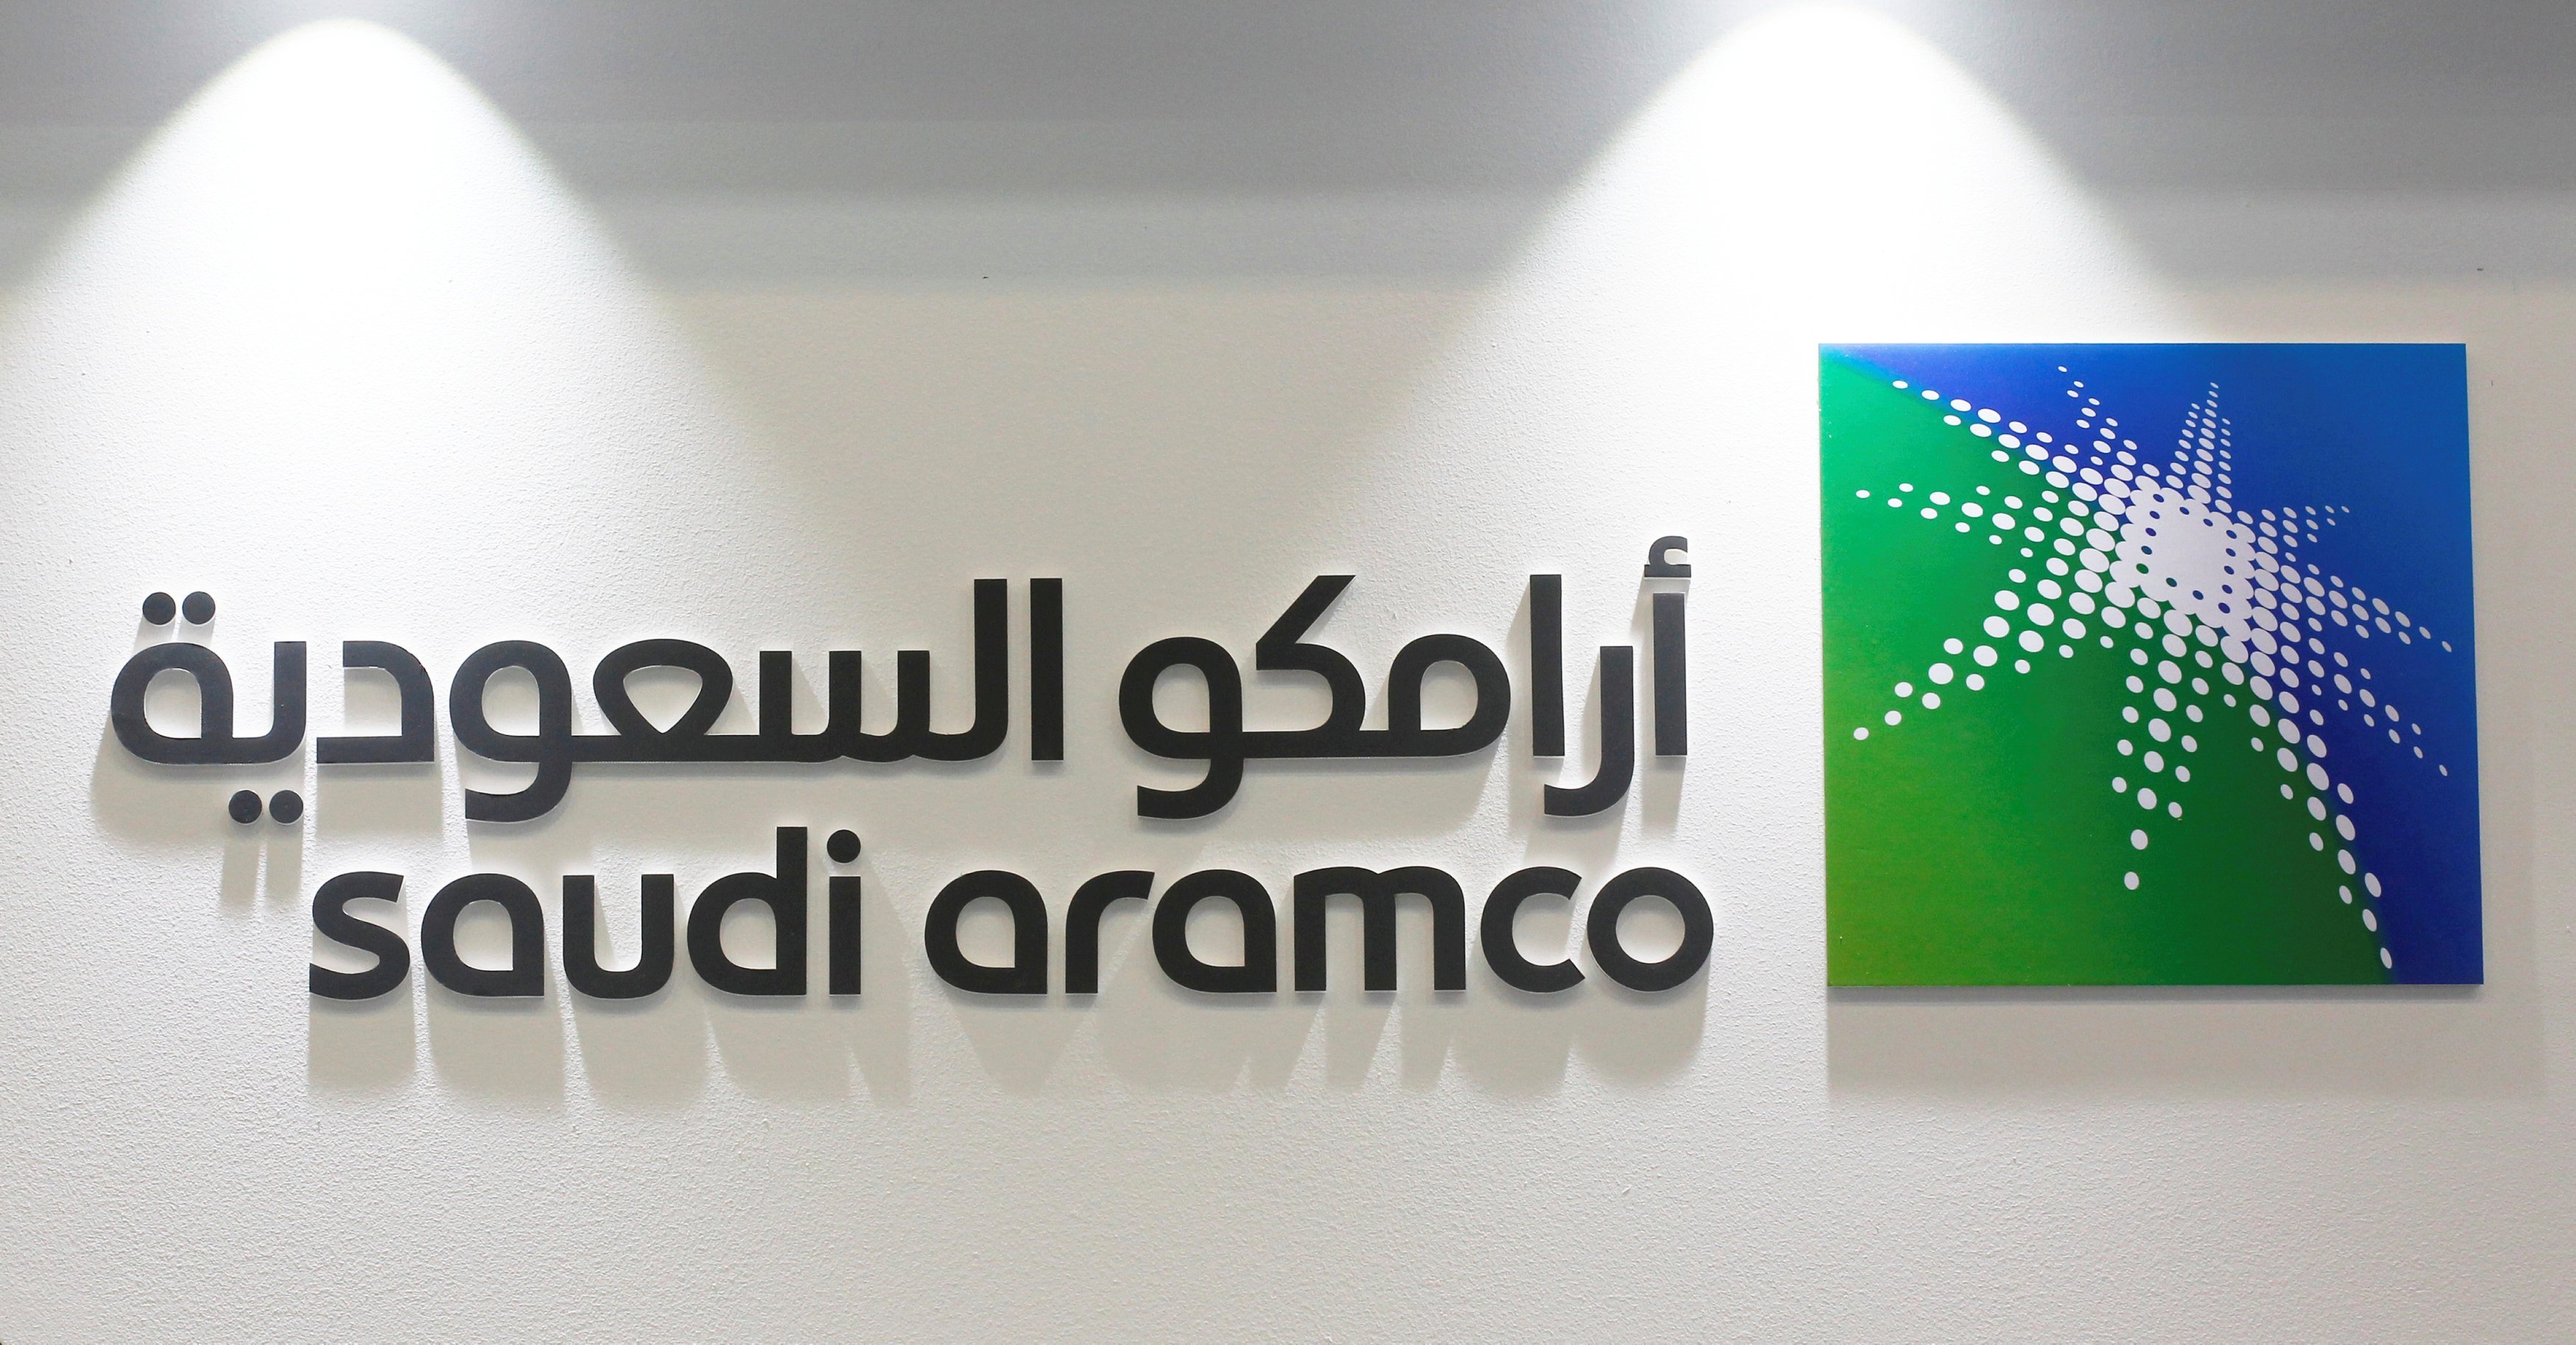 Ryad transforme Aramco en société par actions en vue de son IPO